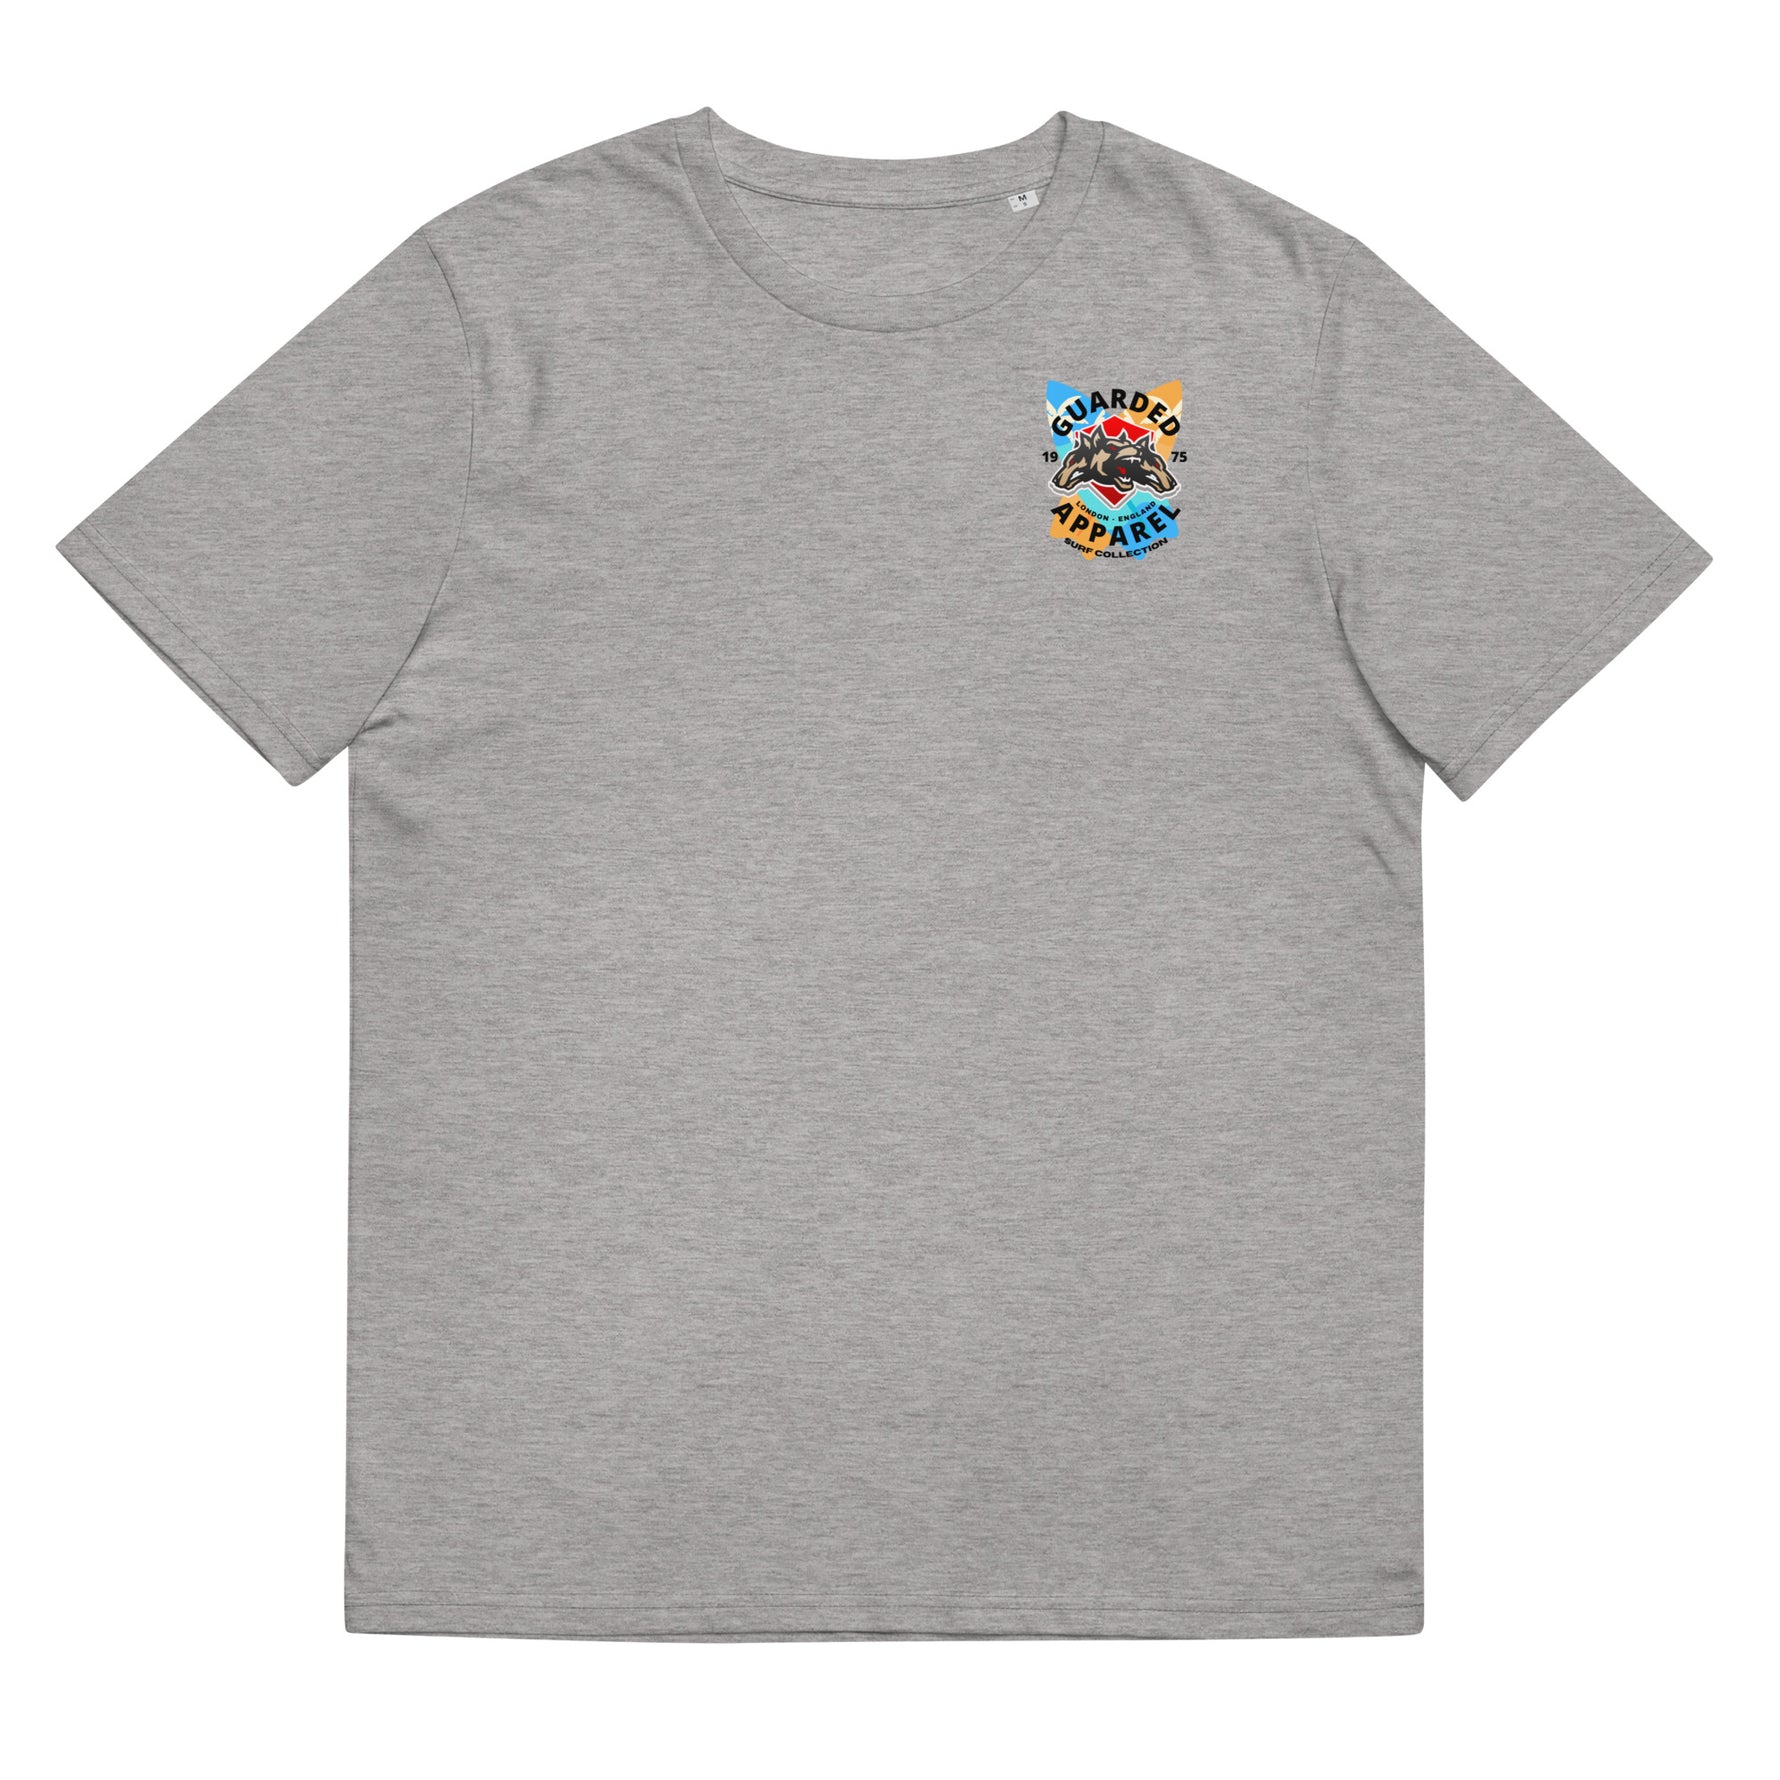 Unisex Printed T-Shirt | Unisex Cotton T-Shirt | Guarded Apparel